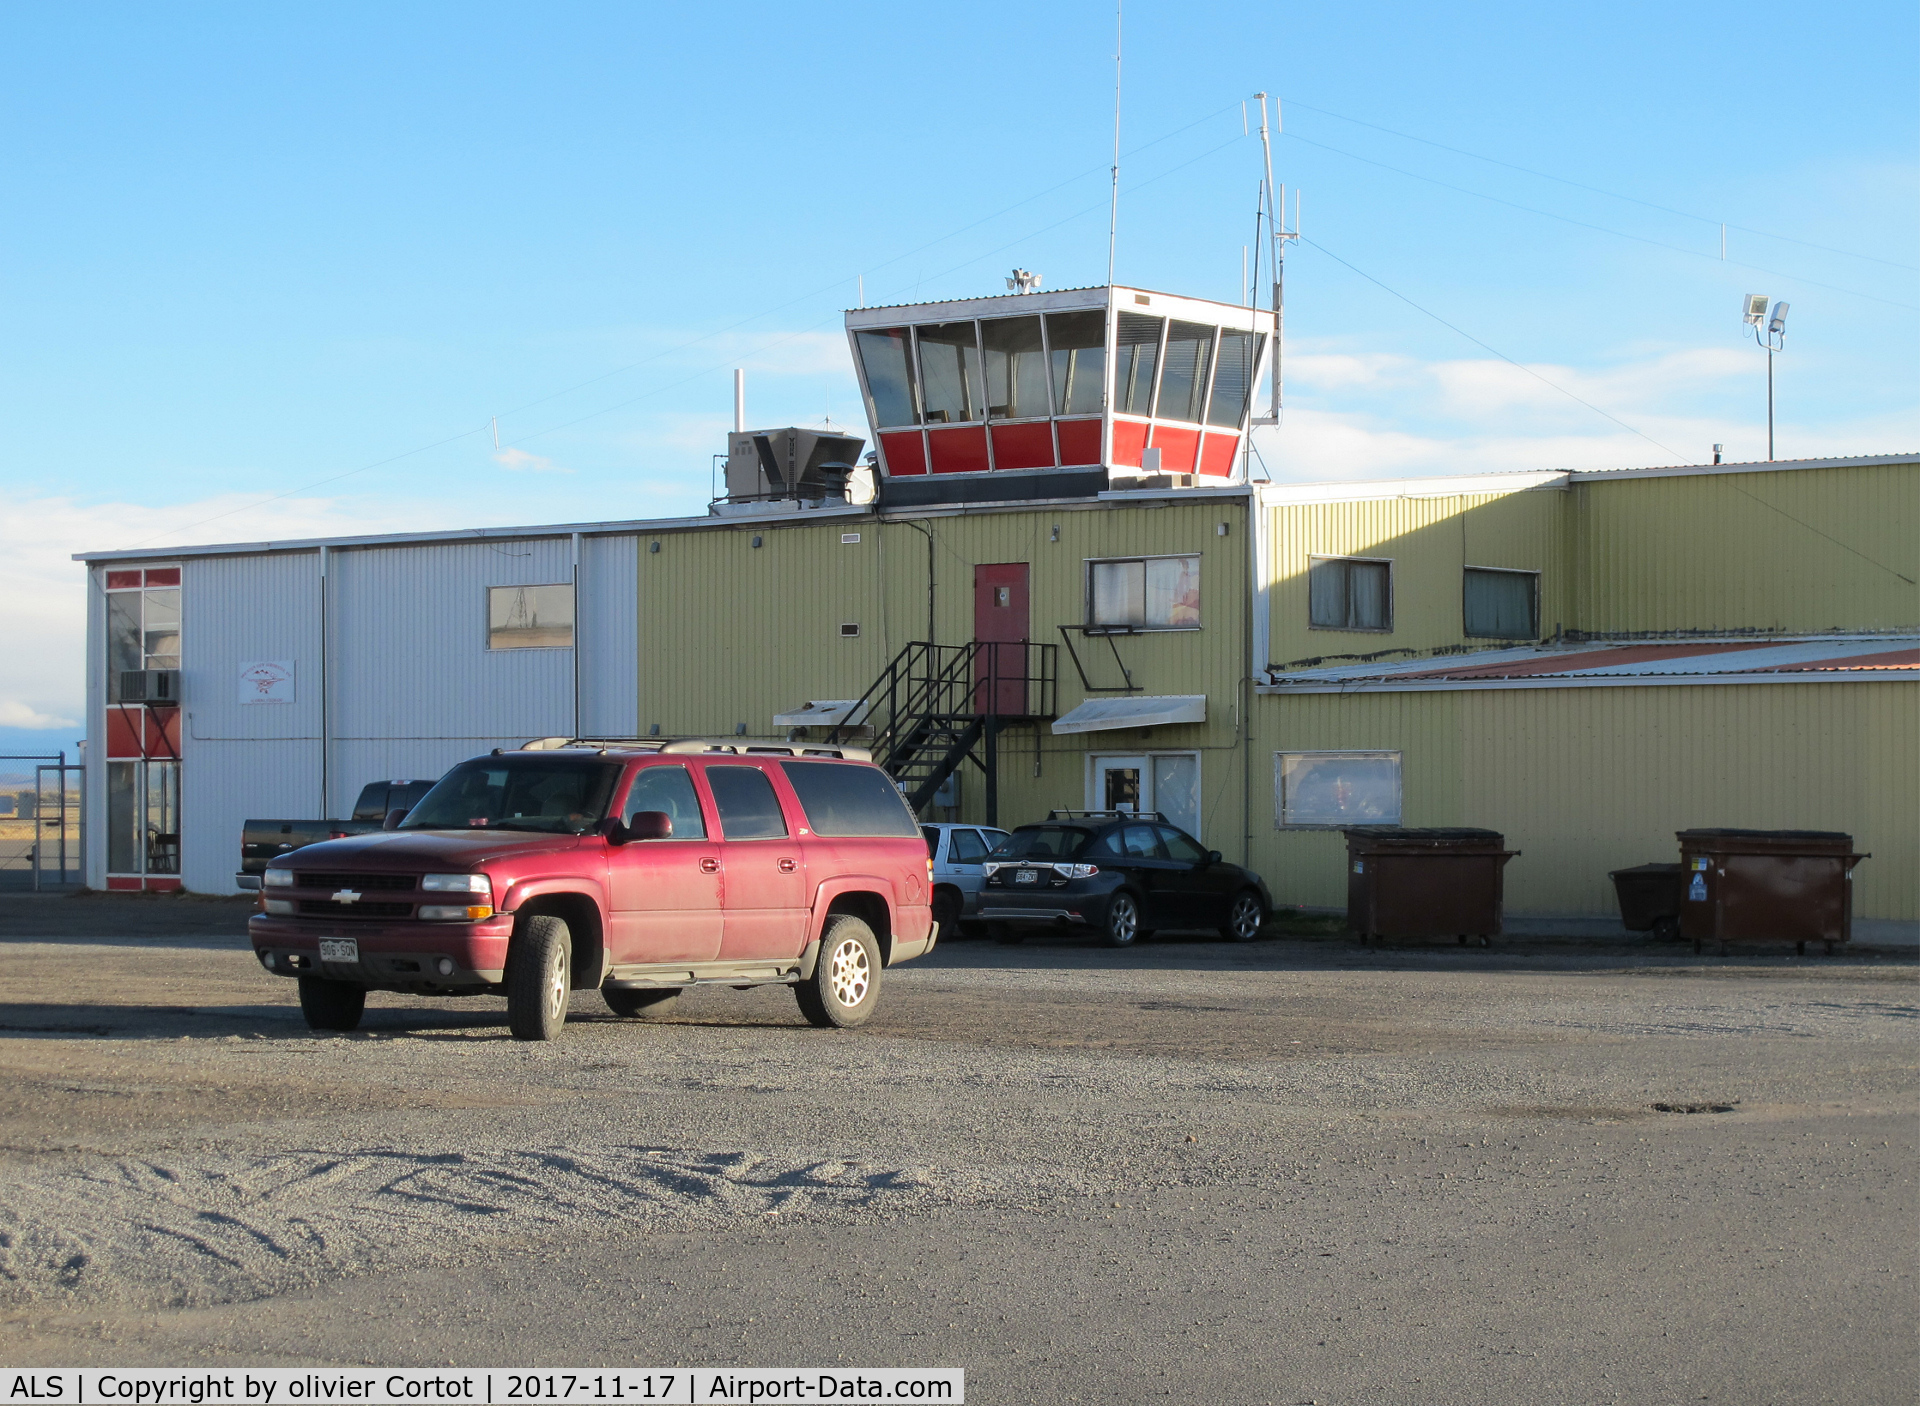 San Luis Valley Rgnl/bergman Field Airport (ALS) - the control tower